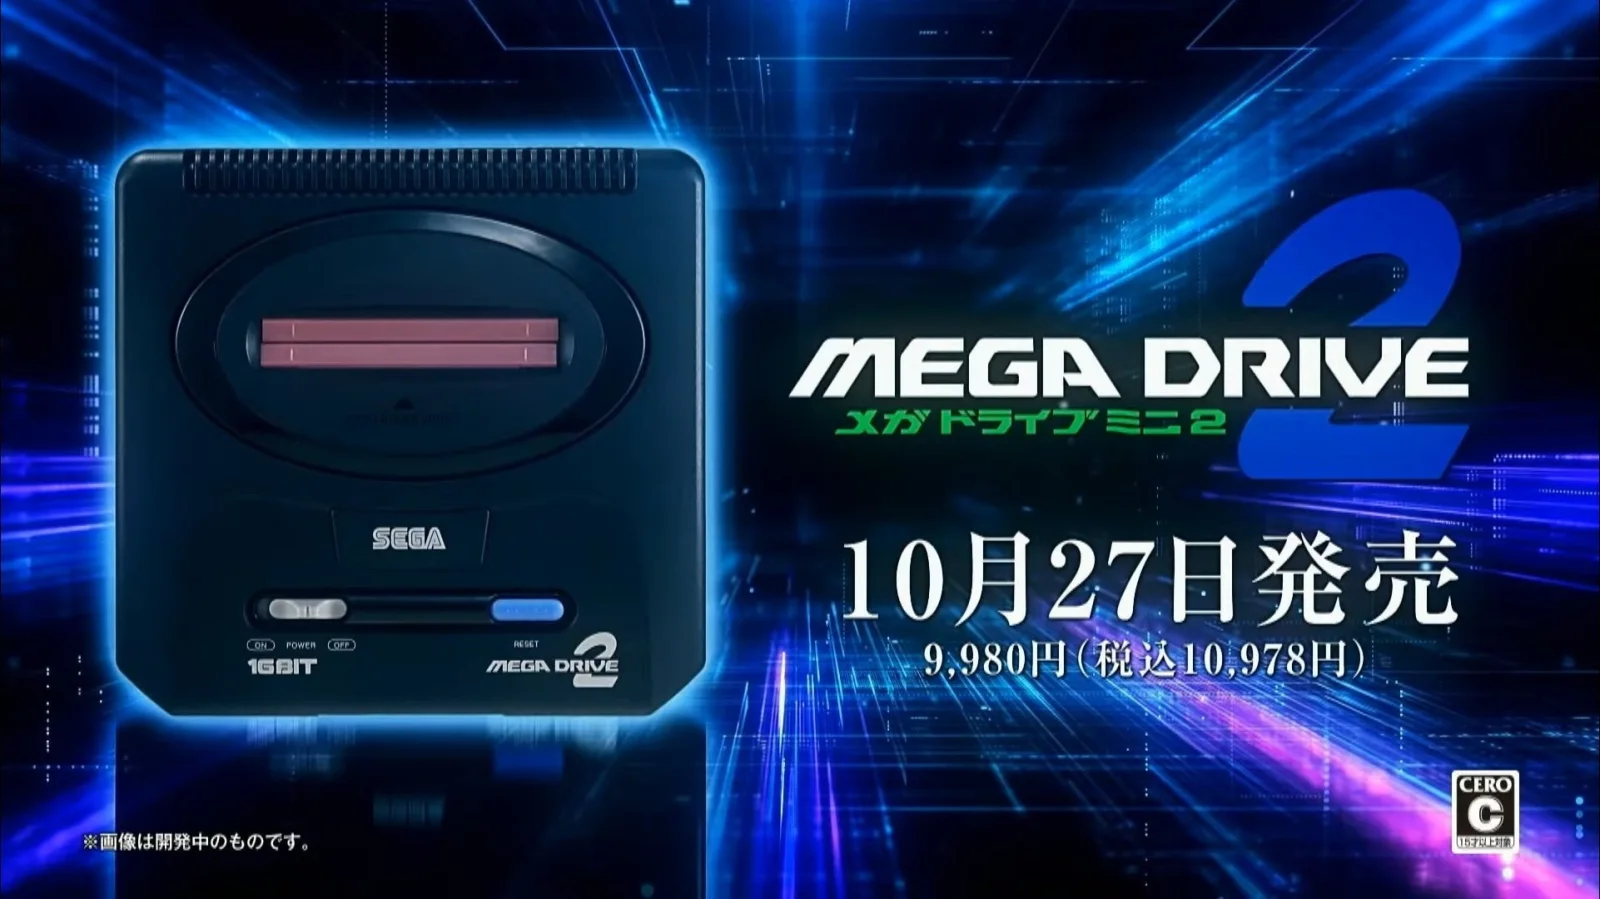 Mega Drive mini 2正式公布，将于10月27日发售